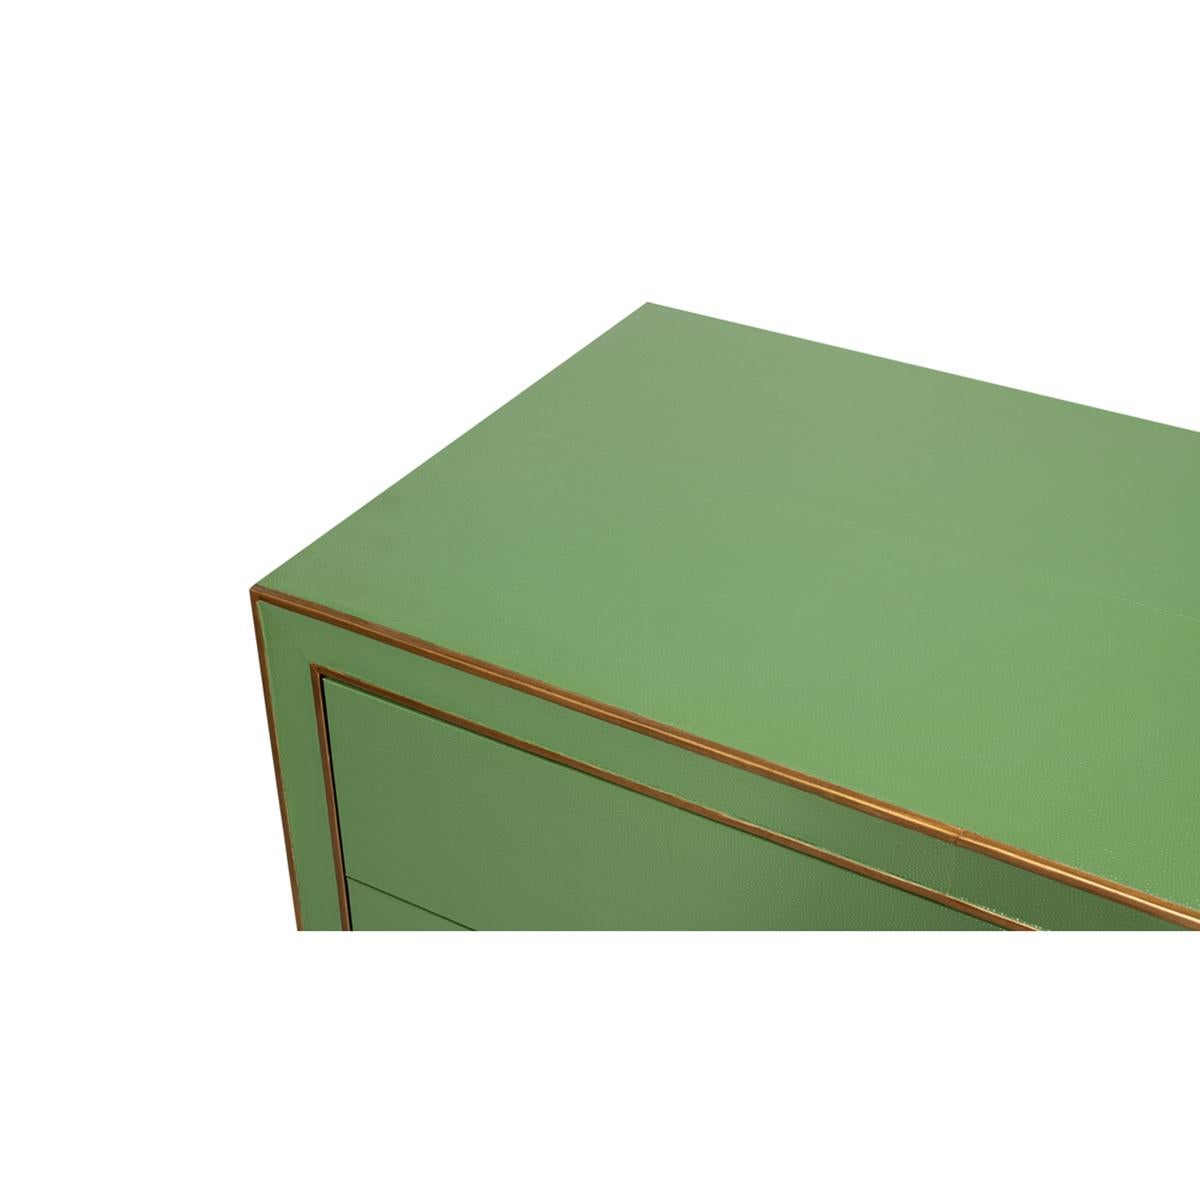 Asian Art Deco Style Shagreen Dresser in Watercress Green For Sale